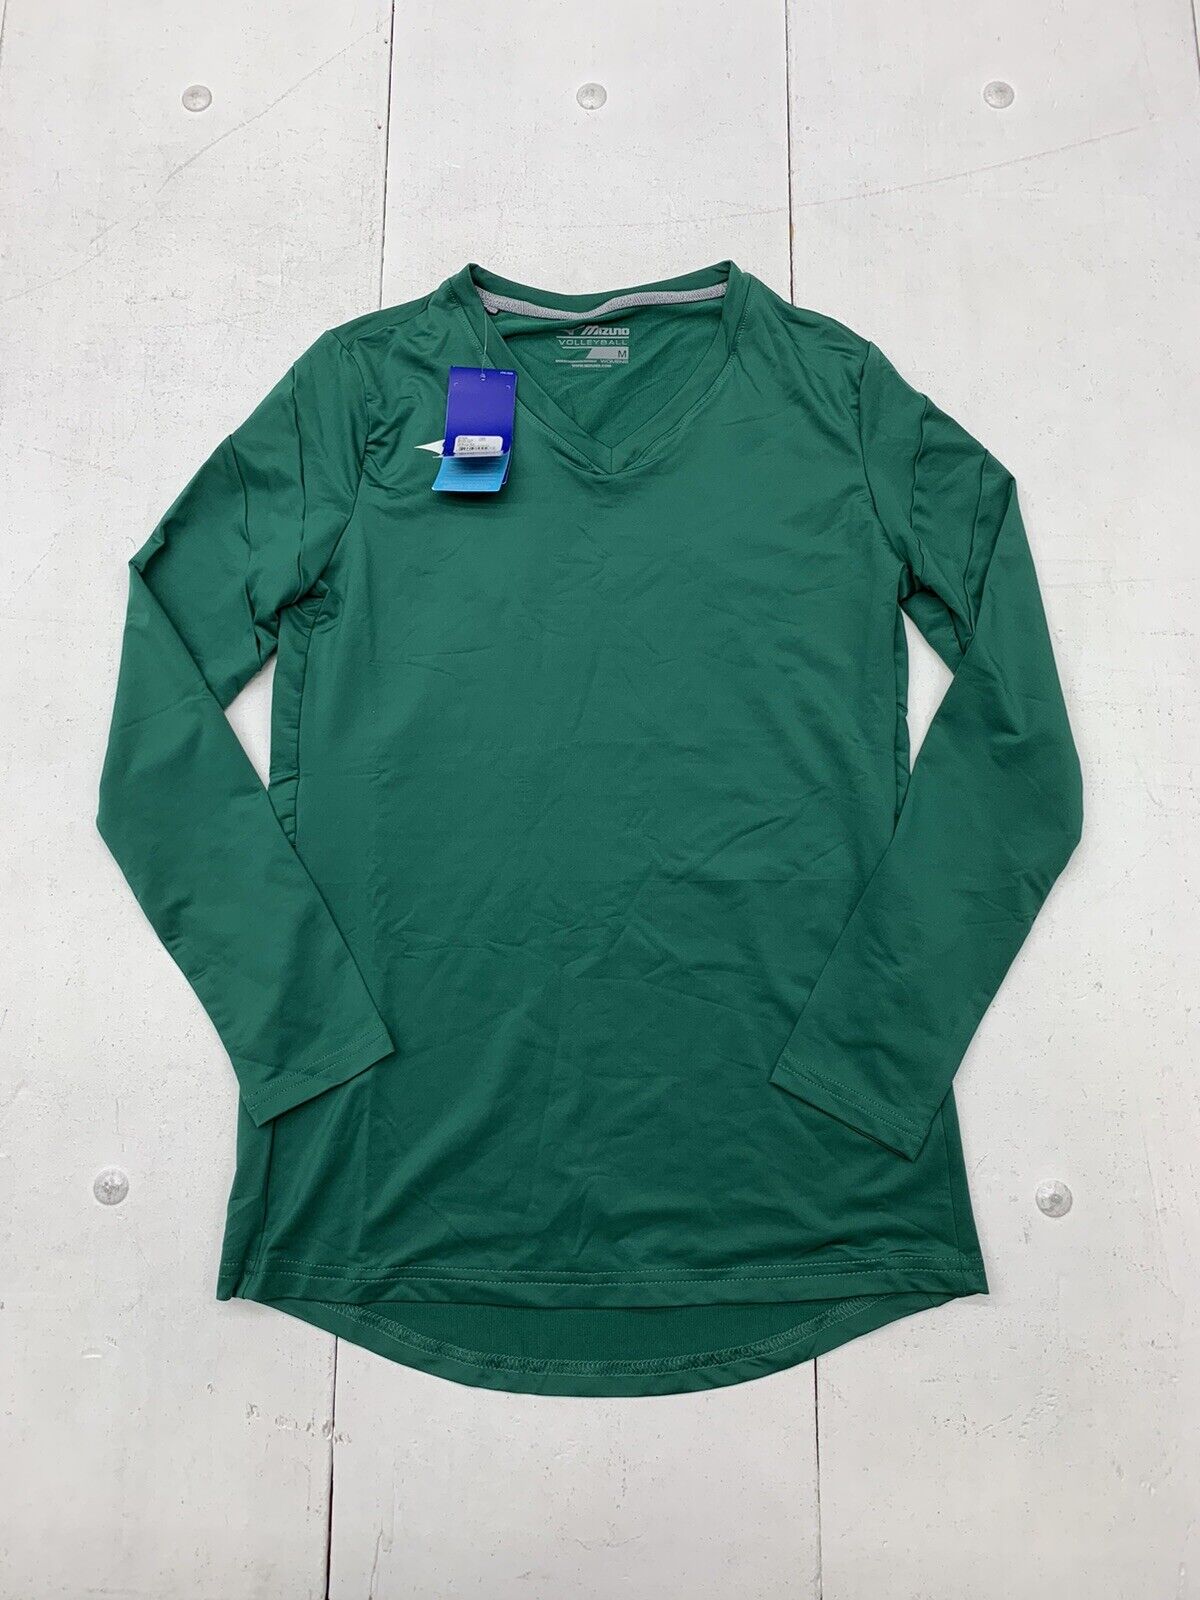 Mizuno Womens Green Long Sleeve Athletic Shirt Size Medium - beyond exchange